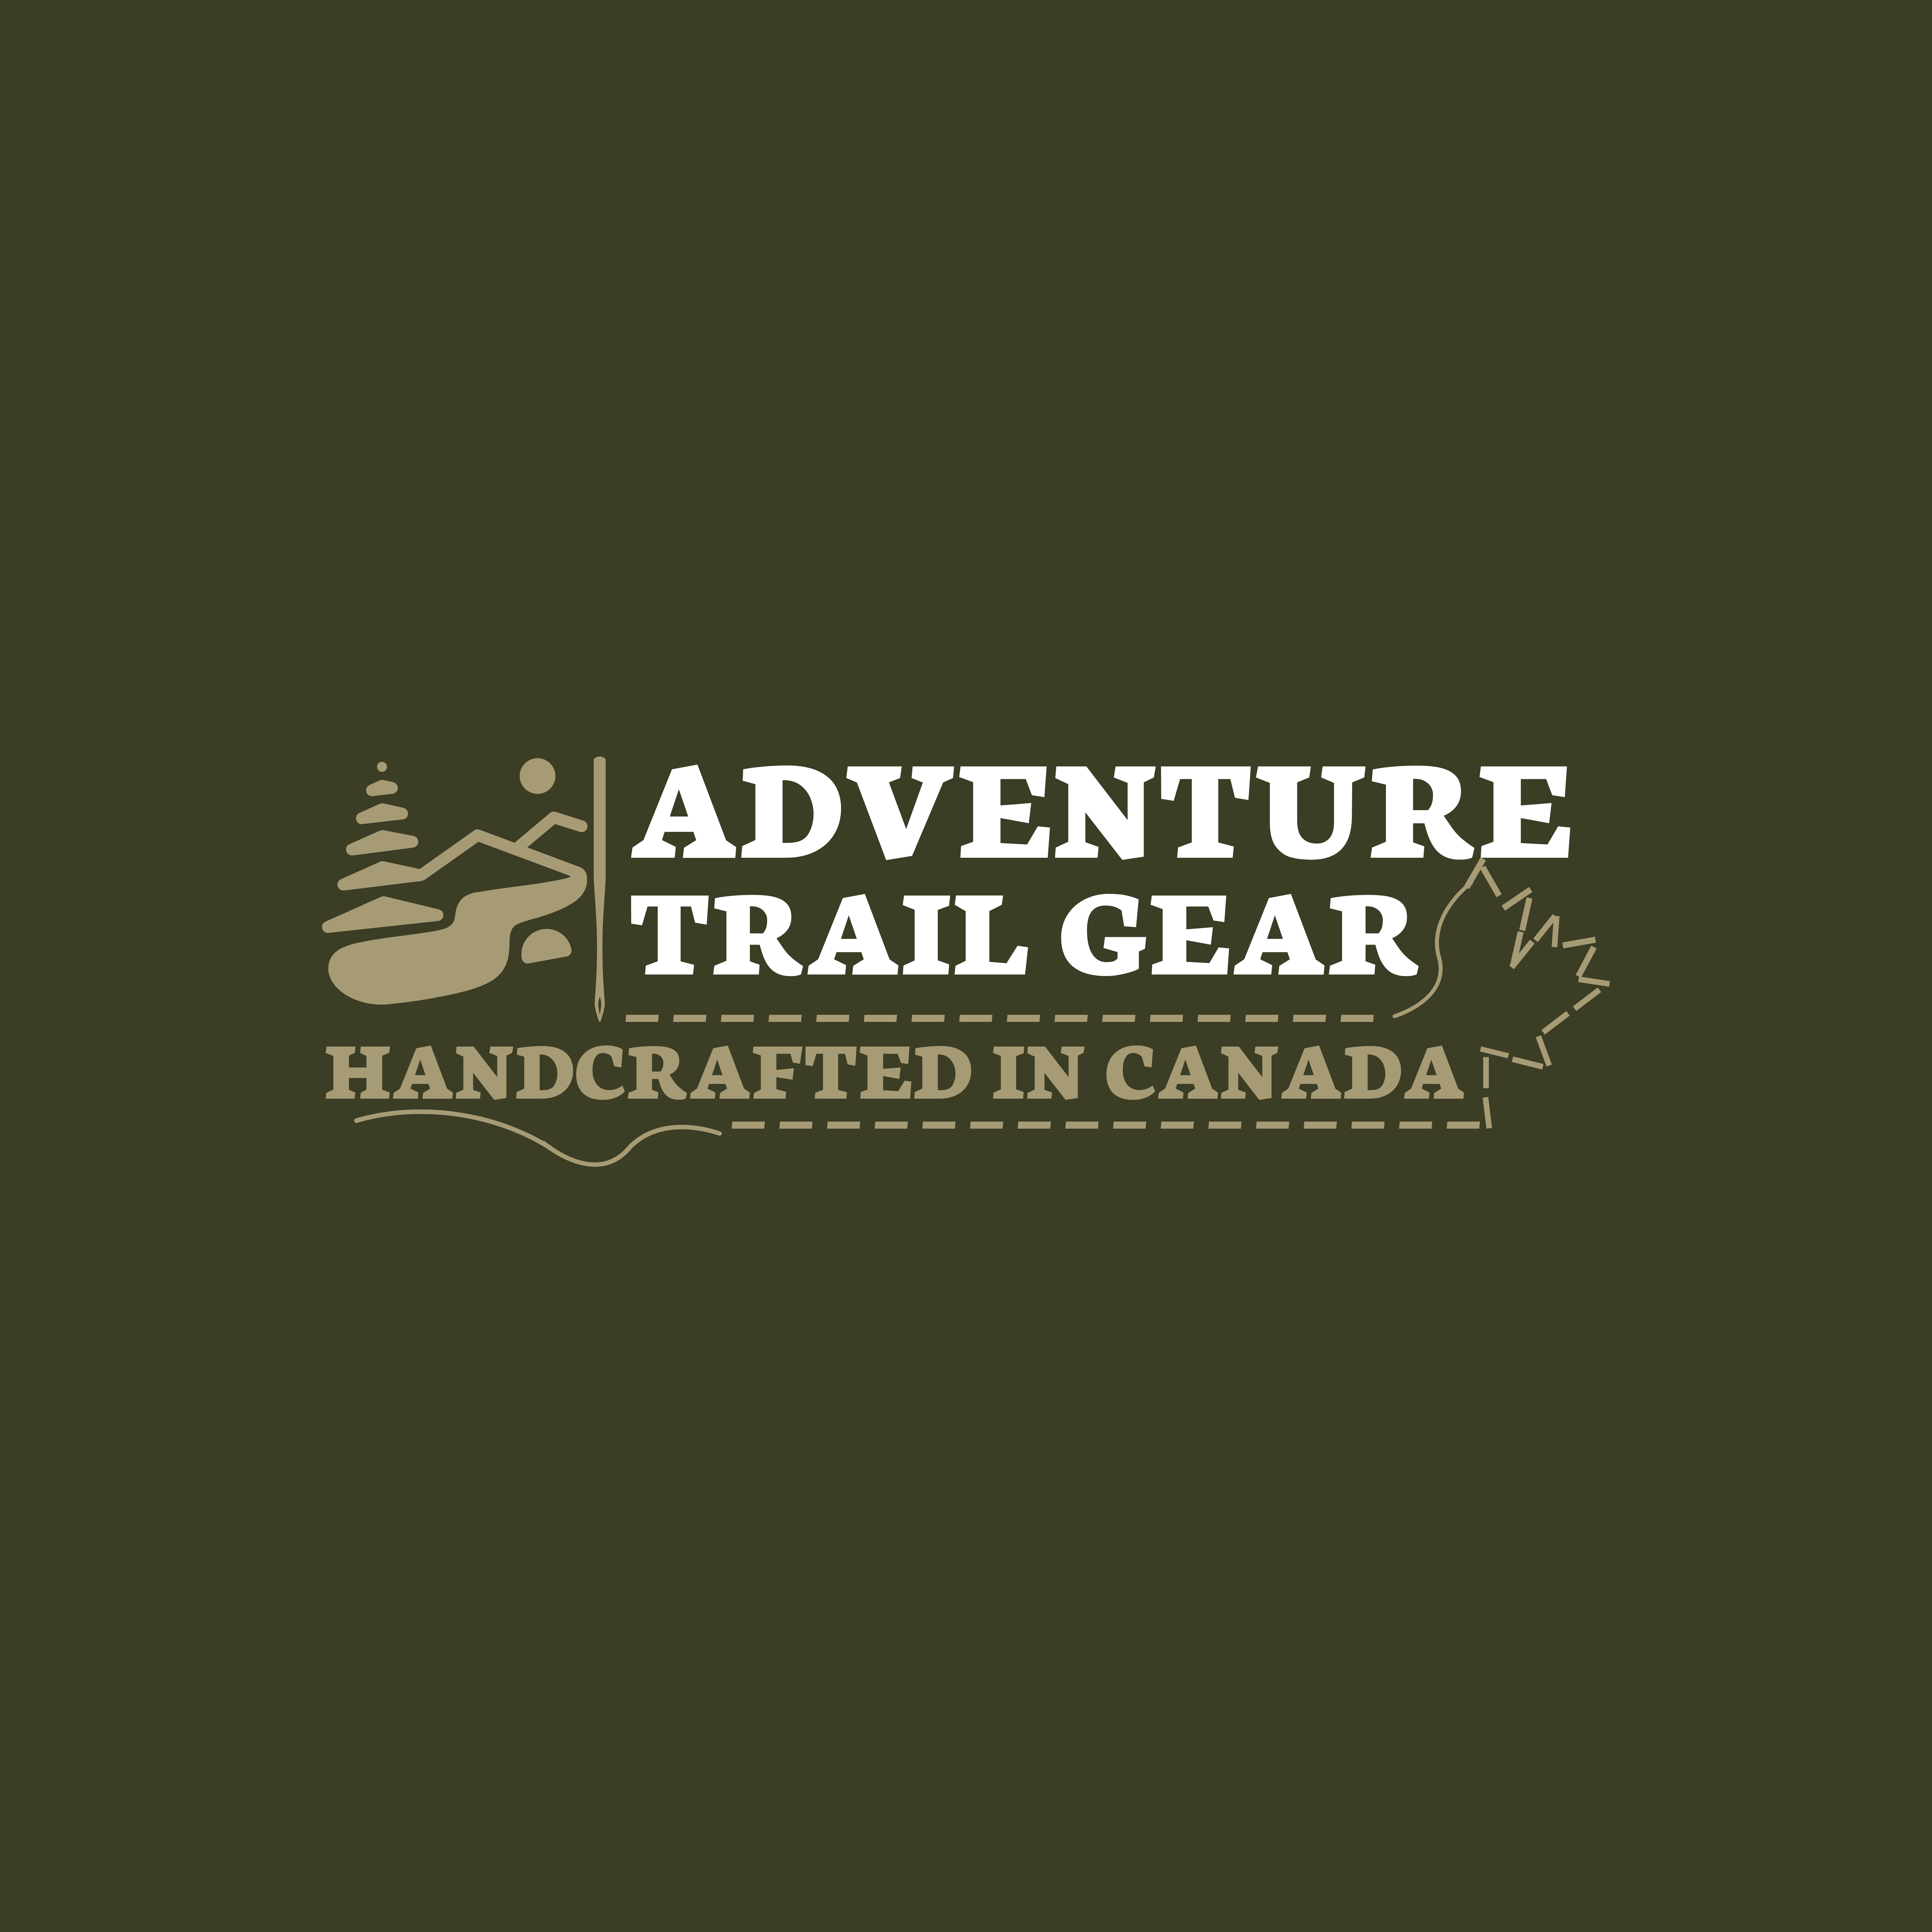 www.adventuretrailgear.com